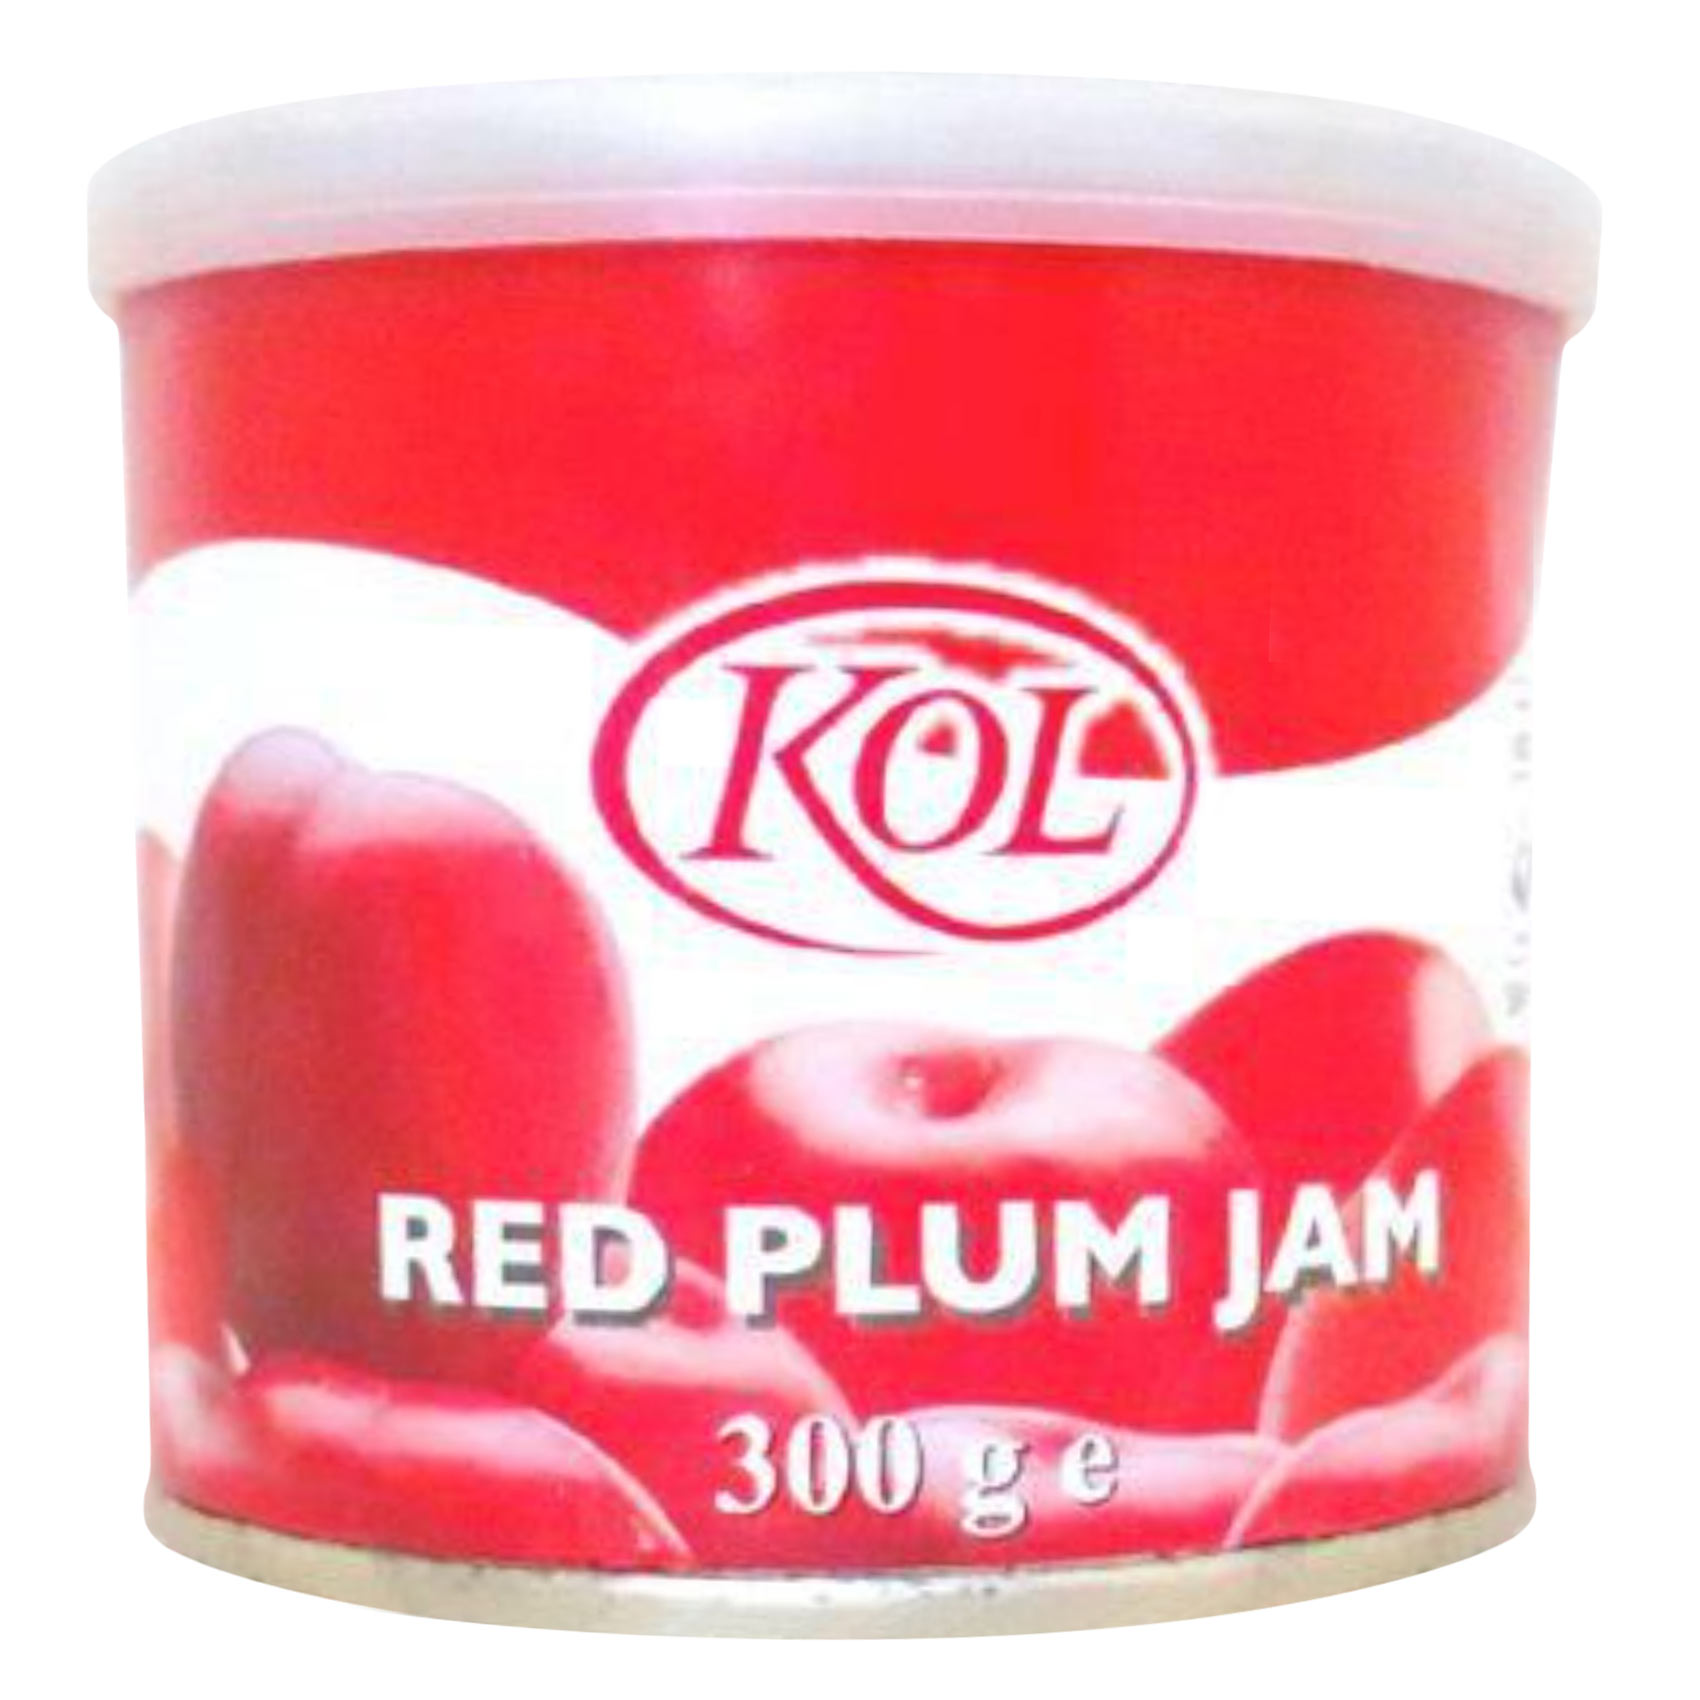 Kol Red Plum Jam 300g